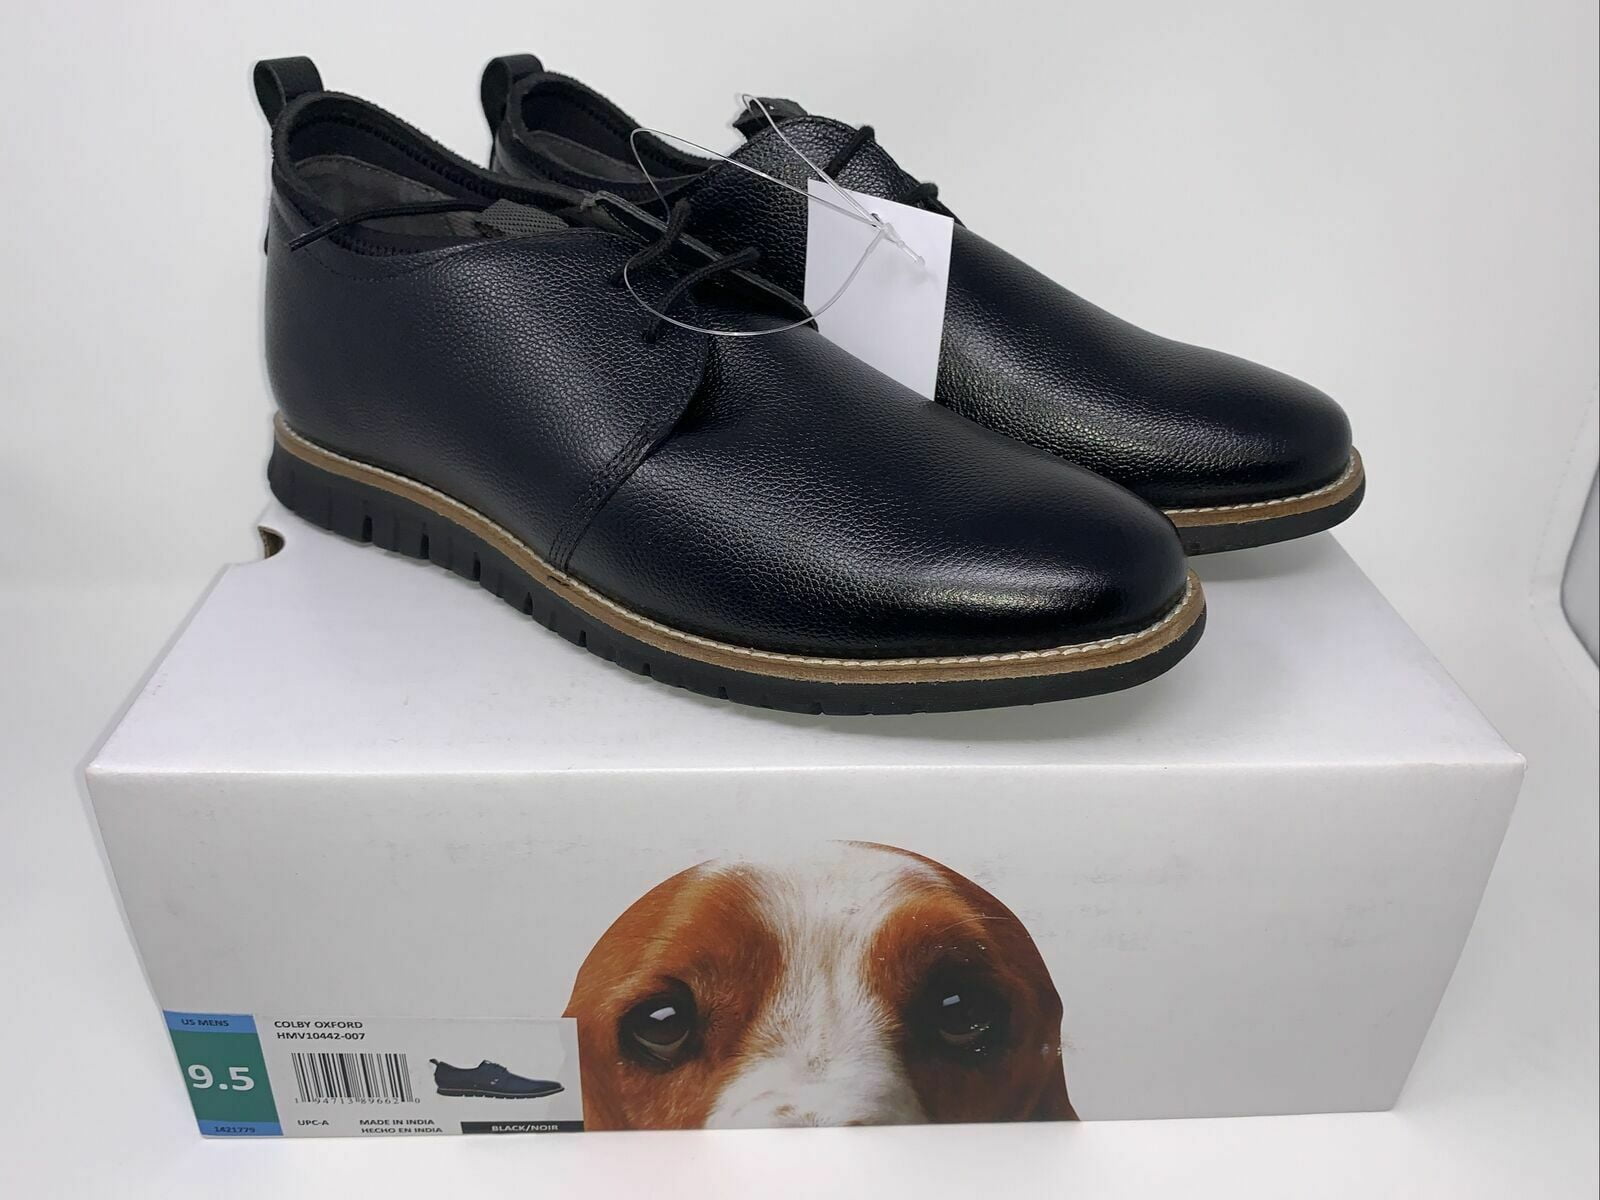 hush puppies men’s dress shoes